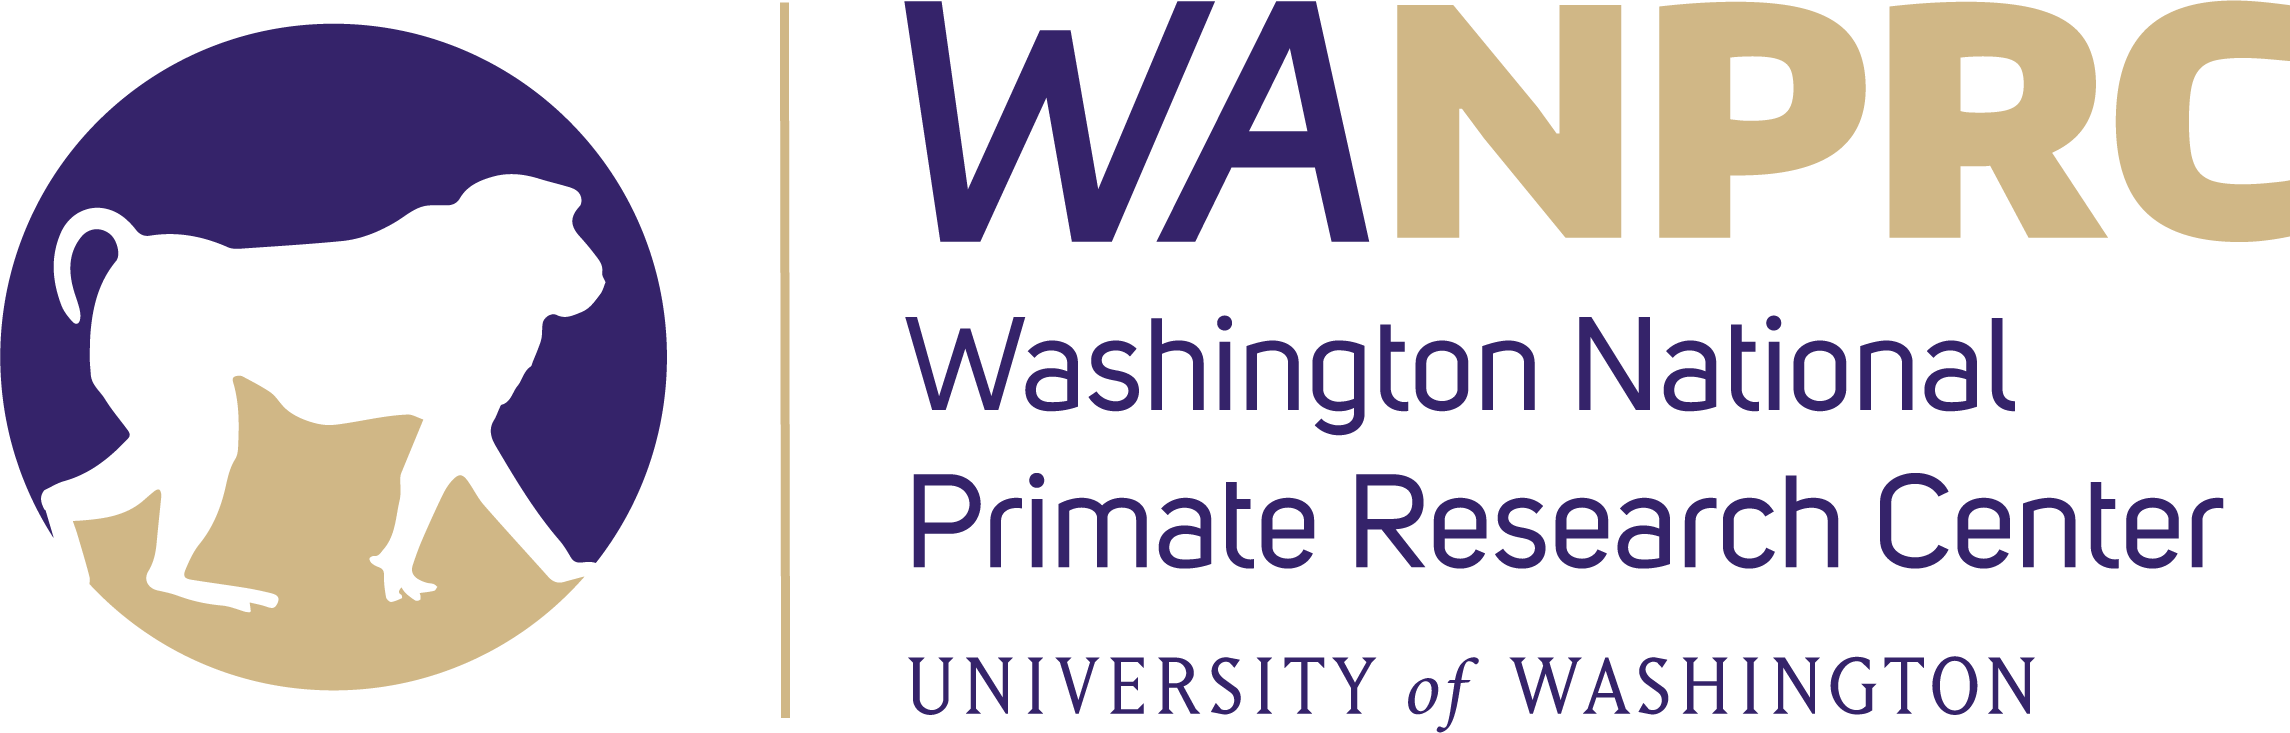 Washington National Primate Research Center